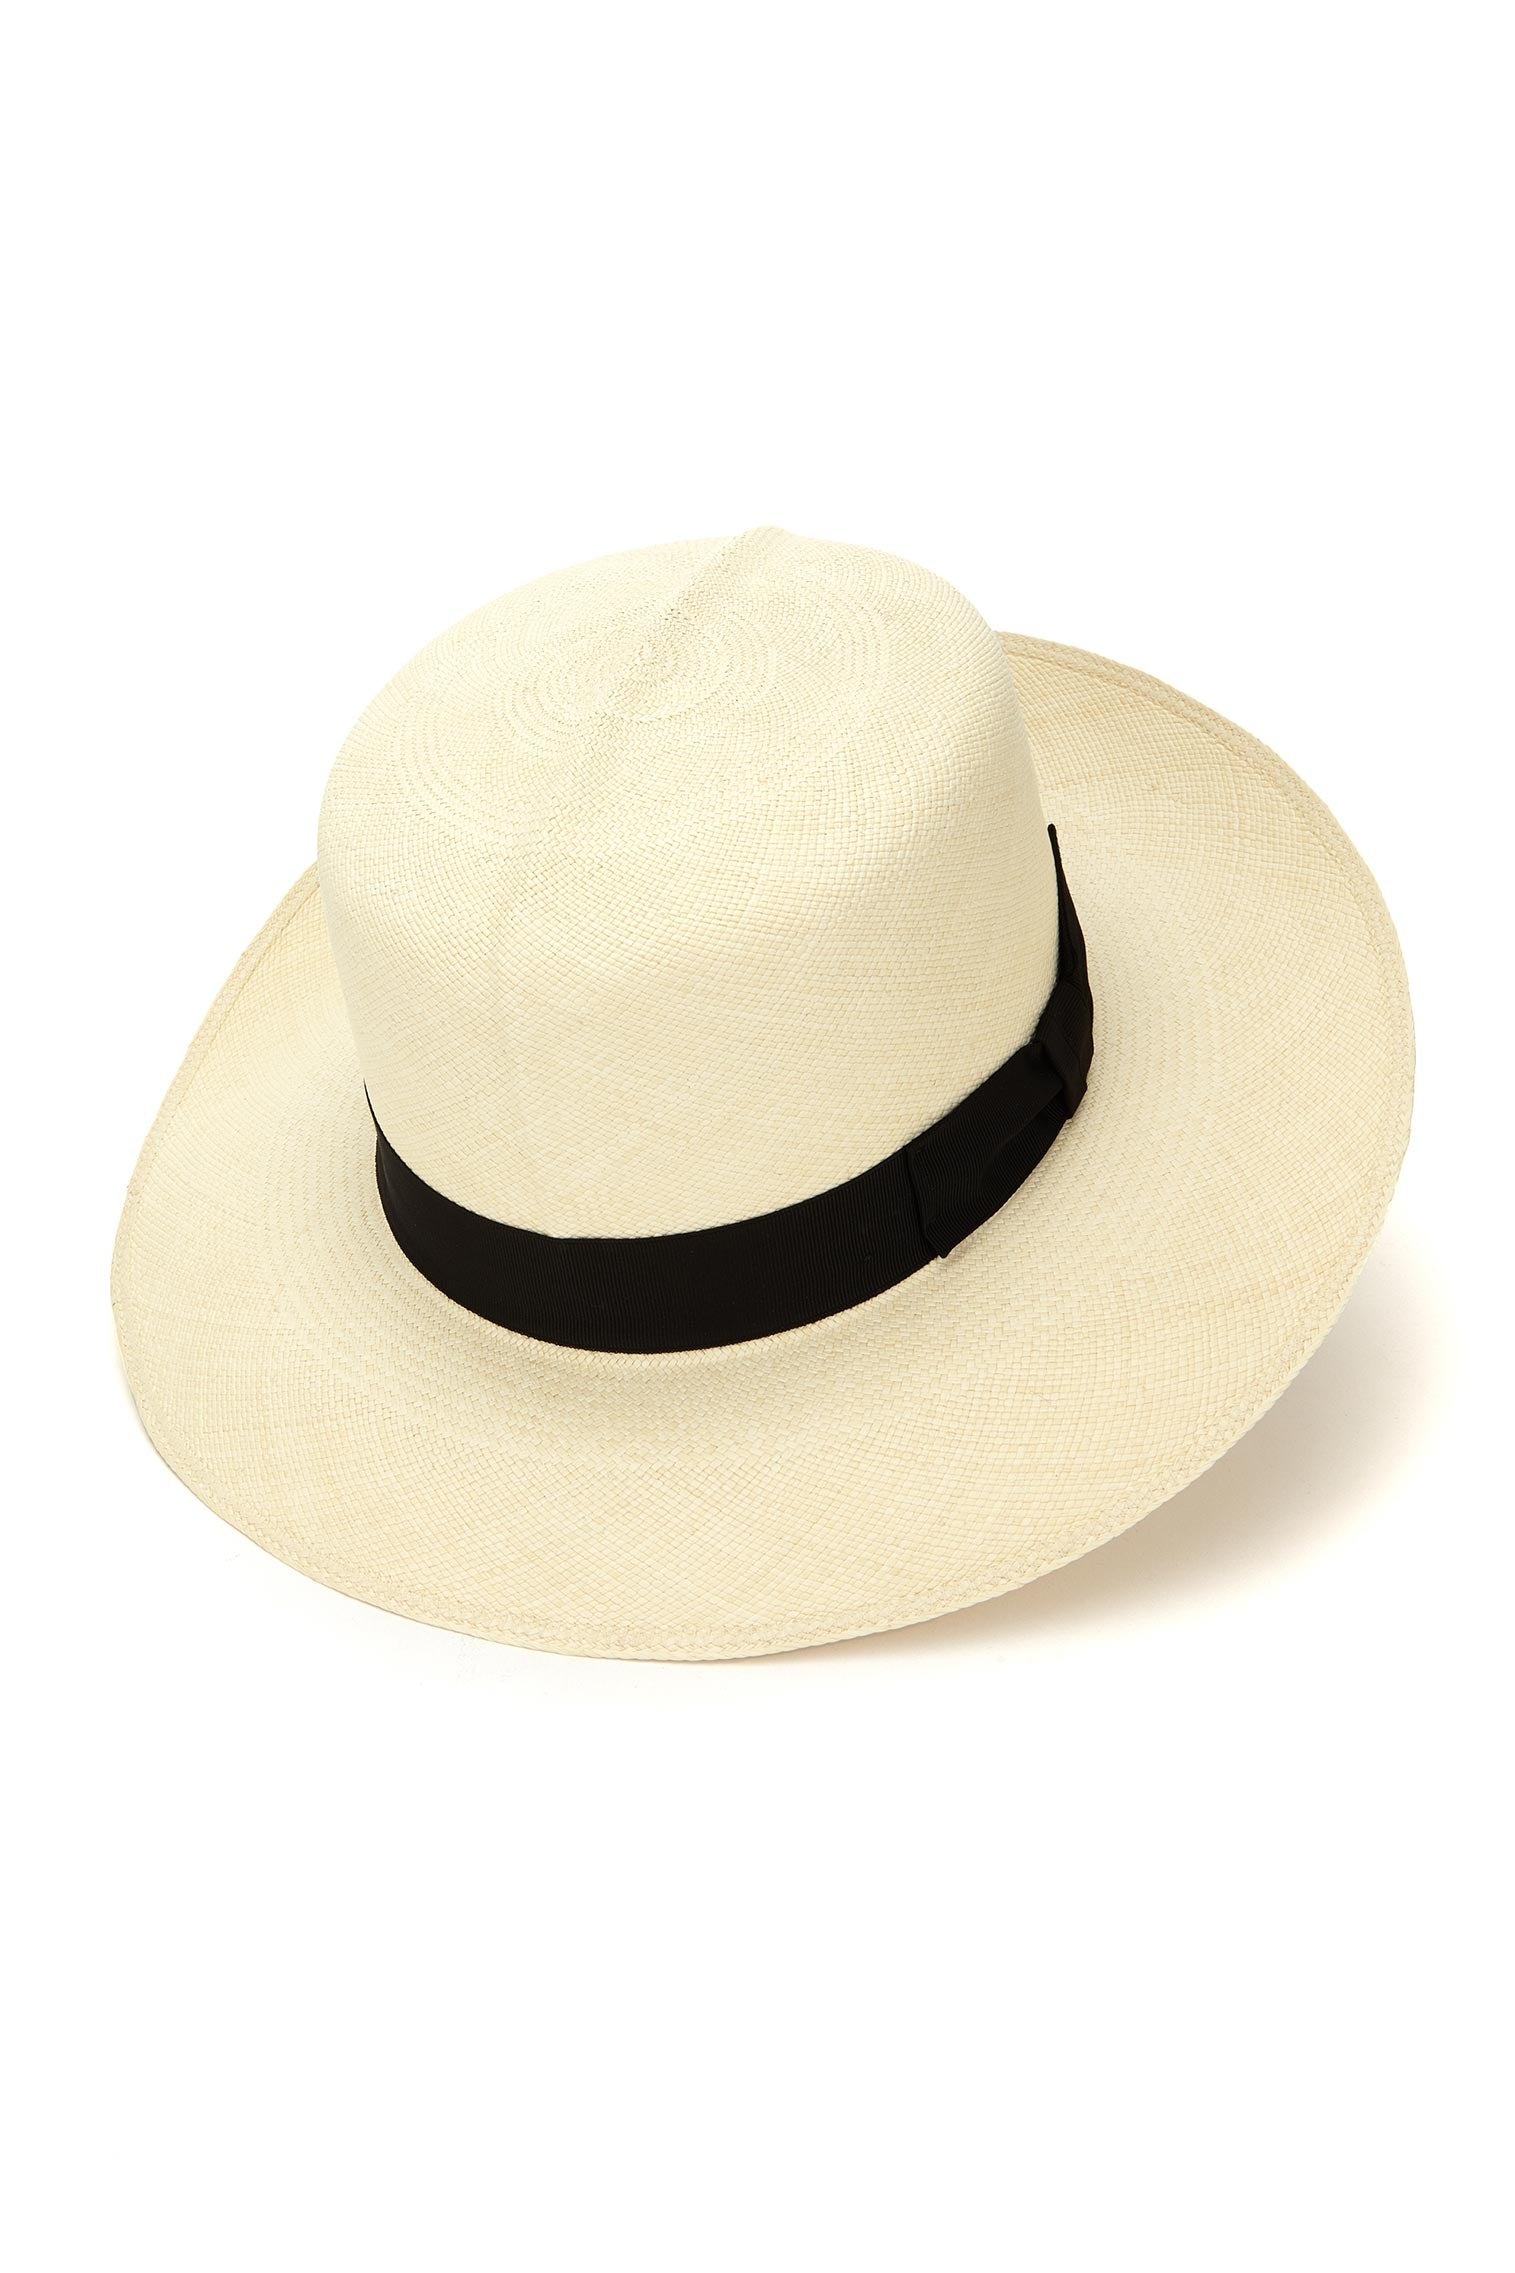 Rollable Superfino Montecristi Panama - Sun Hats & Boaters - Lock & Co. Hatters London UK